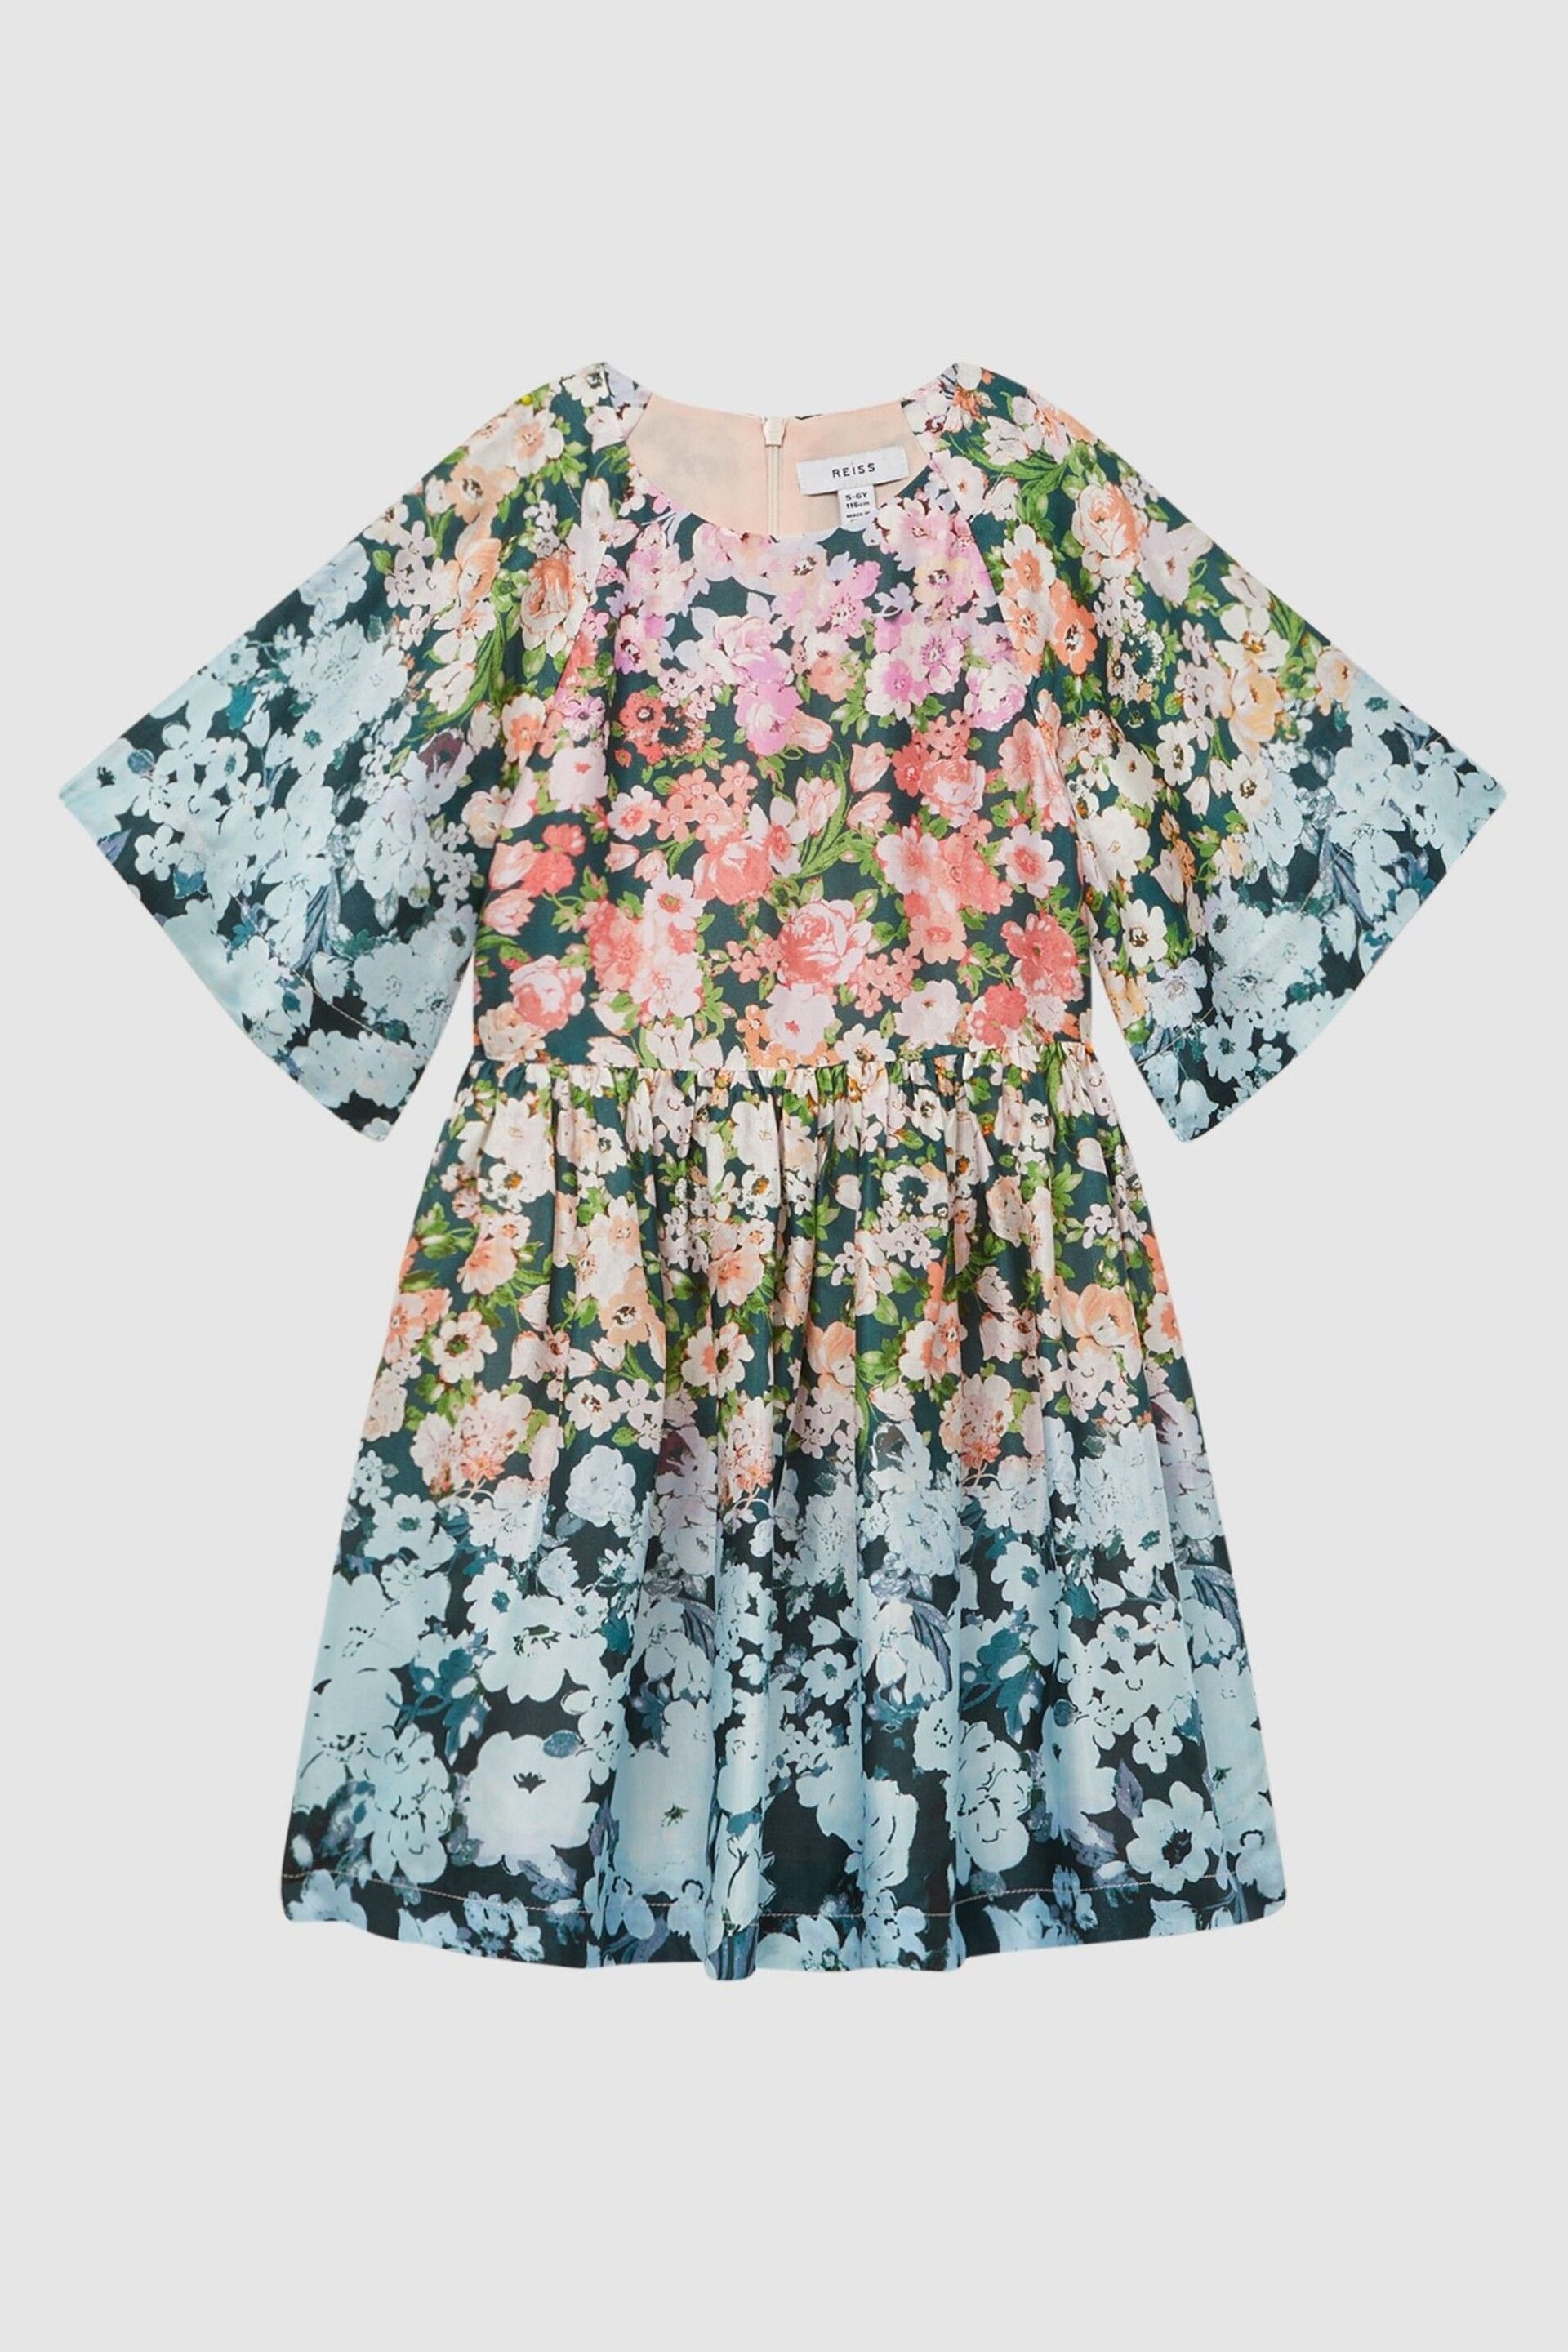 Reiss Multi Marnie Senior Floral Print Bell Sleeve Dress - Image 2 of 6